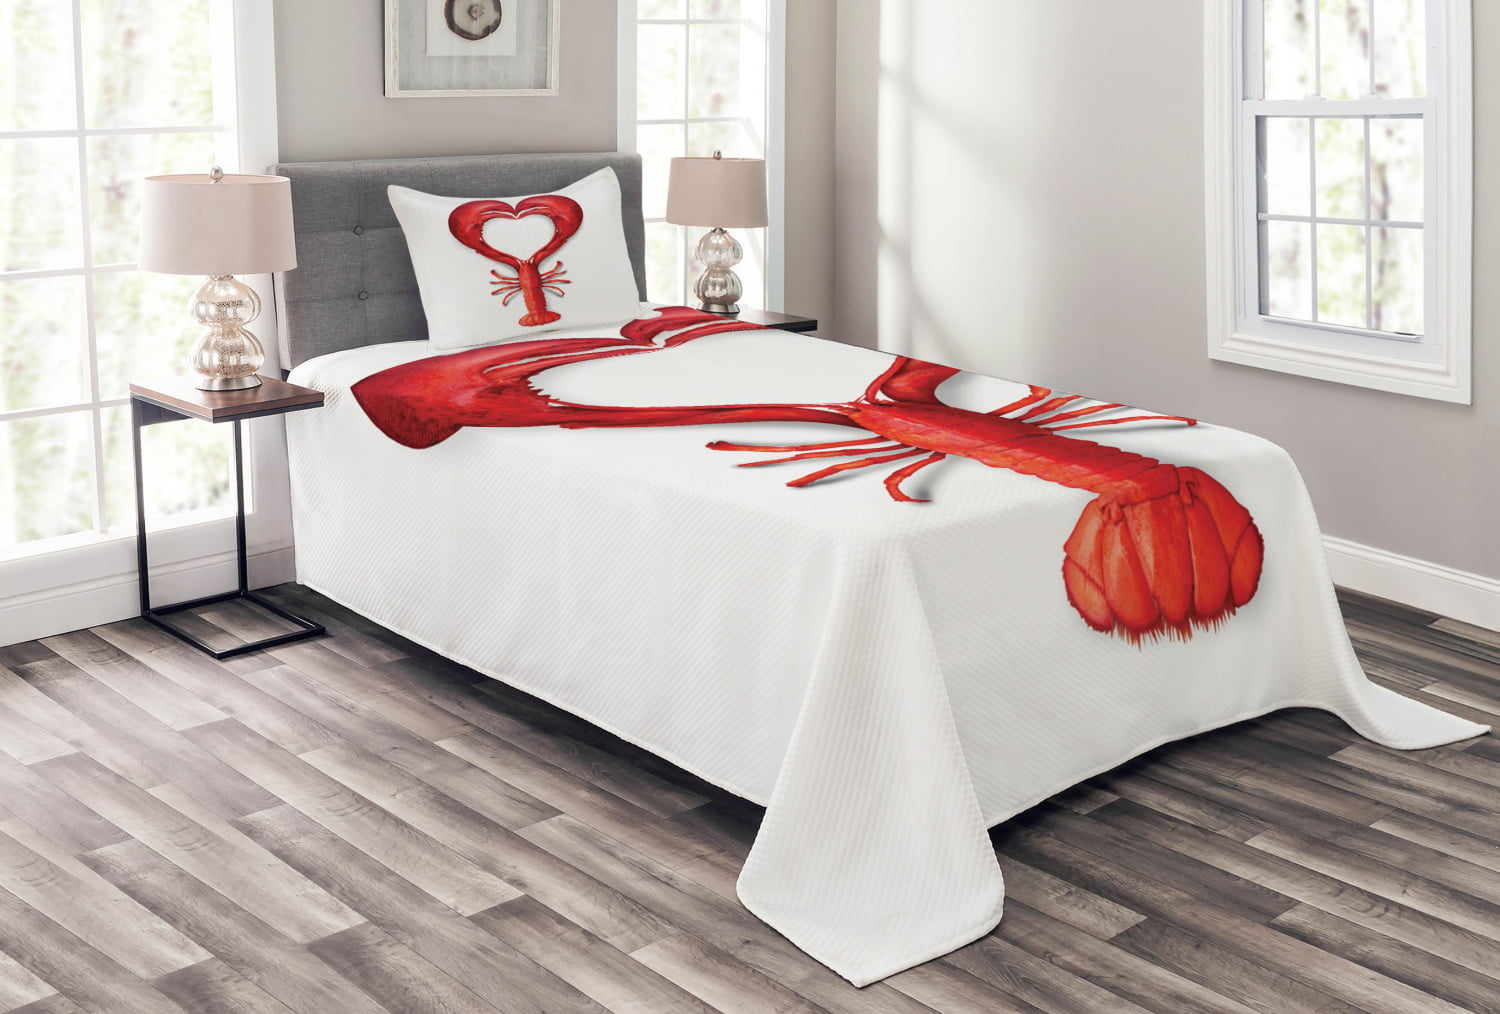 current red lobster menu